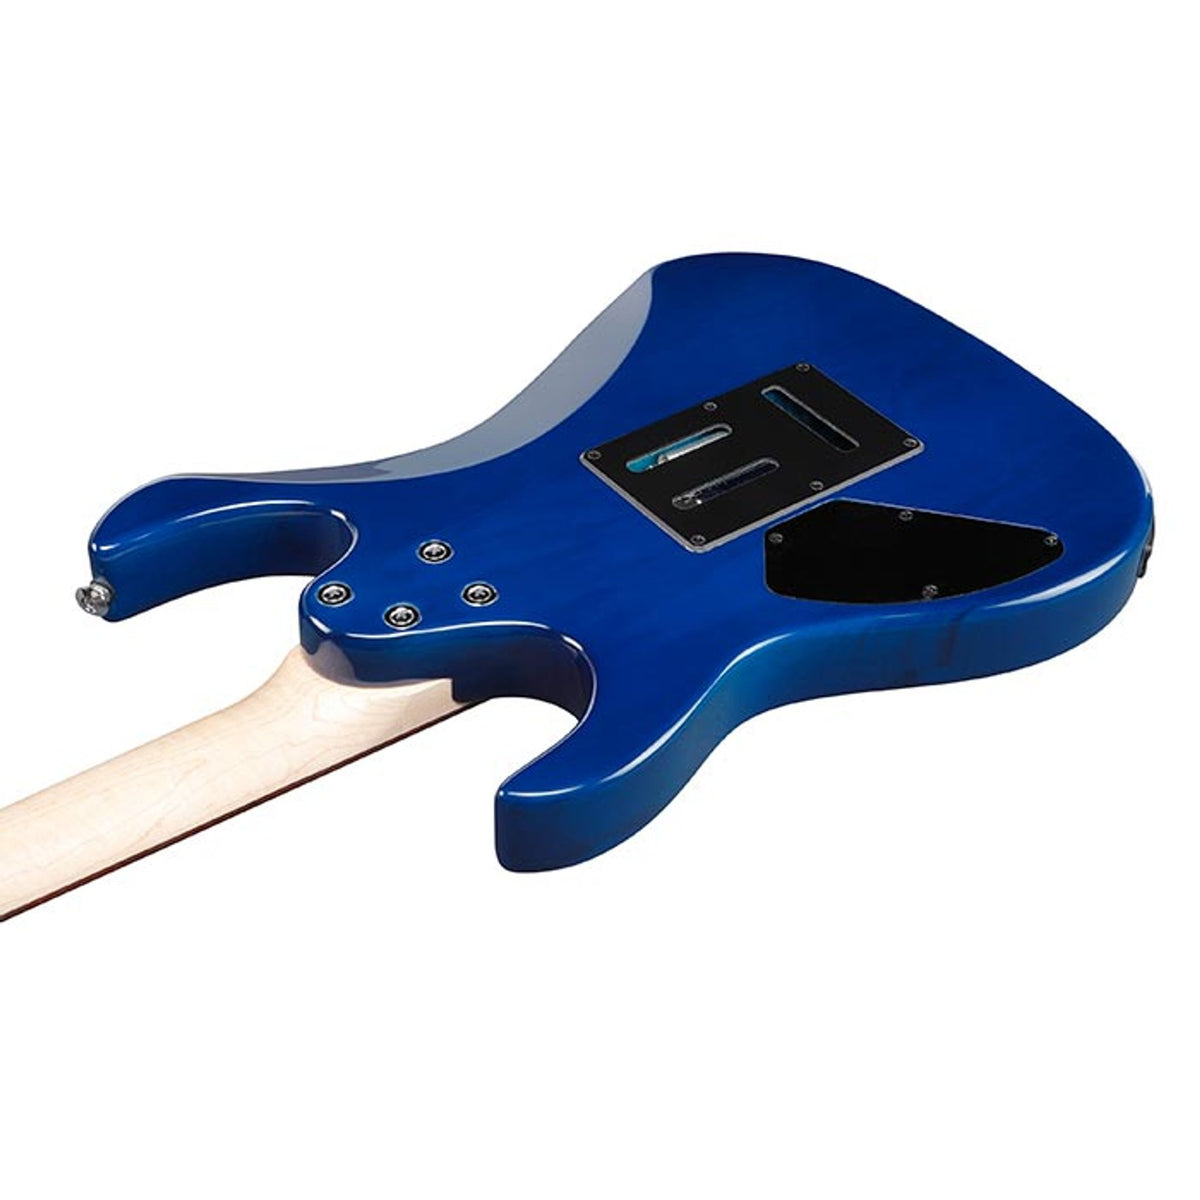 Ibanez GRX70QA Electric Guitar Transparent Blue Burst